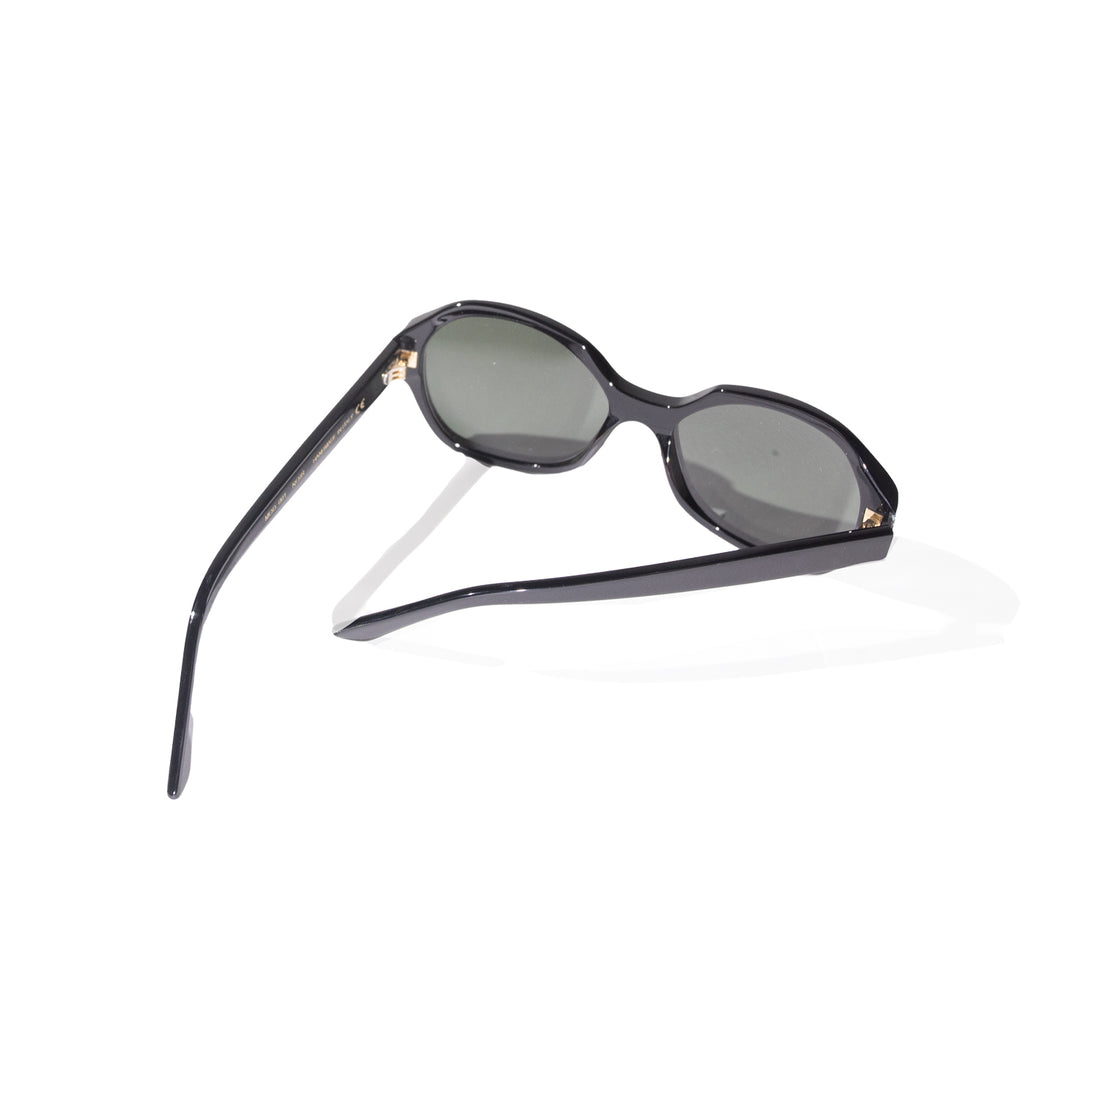 Eva Masaki 001 Sunglasses in Noir